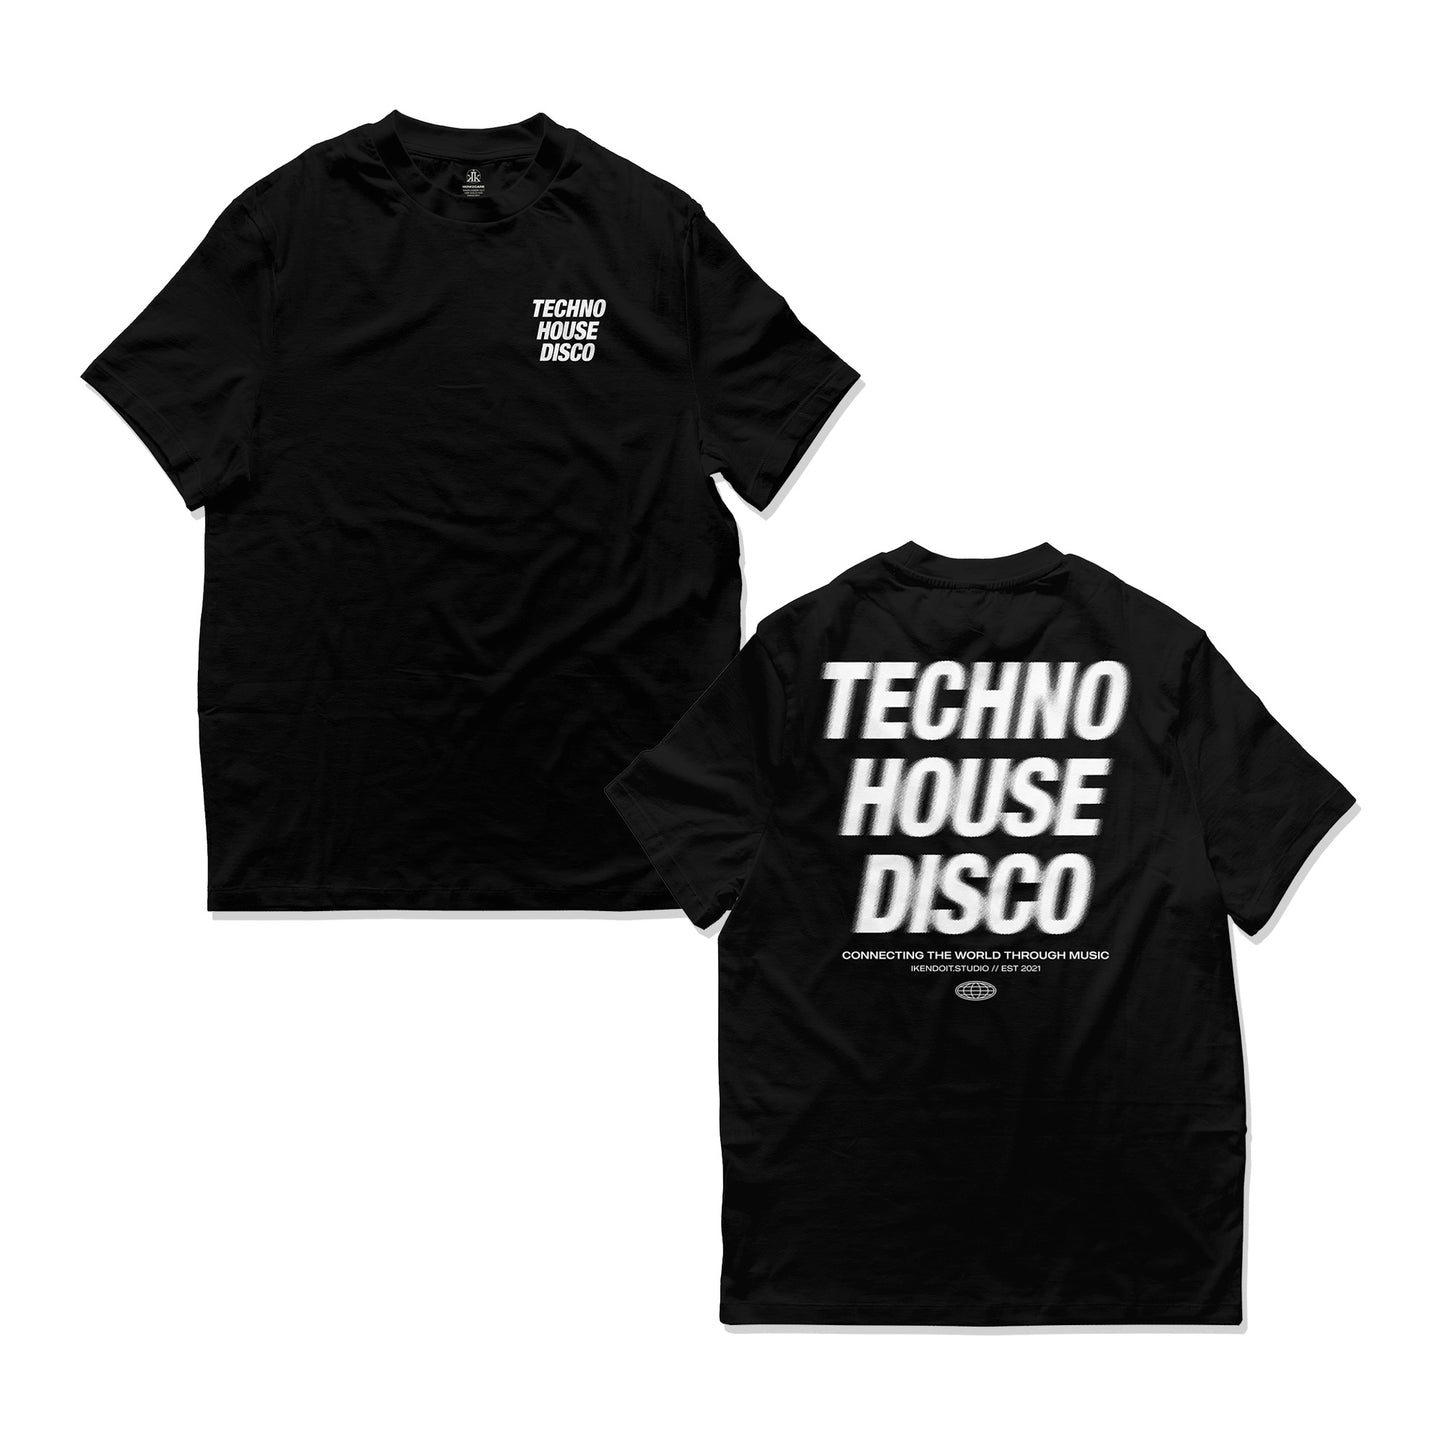 Techno x House x Disco Tee / Black - IKendoit.Shop